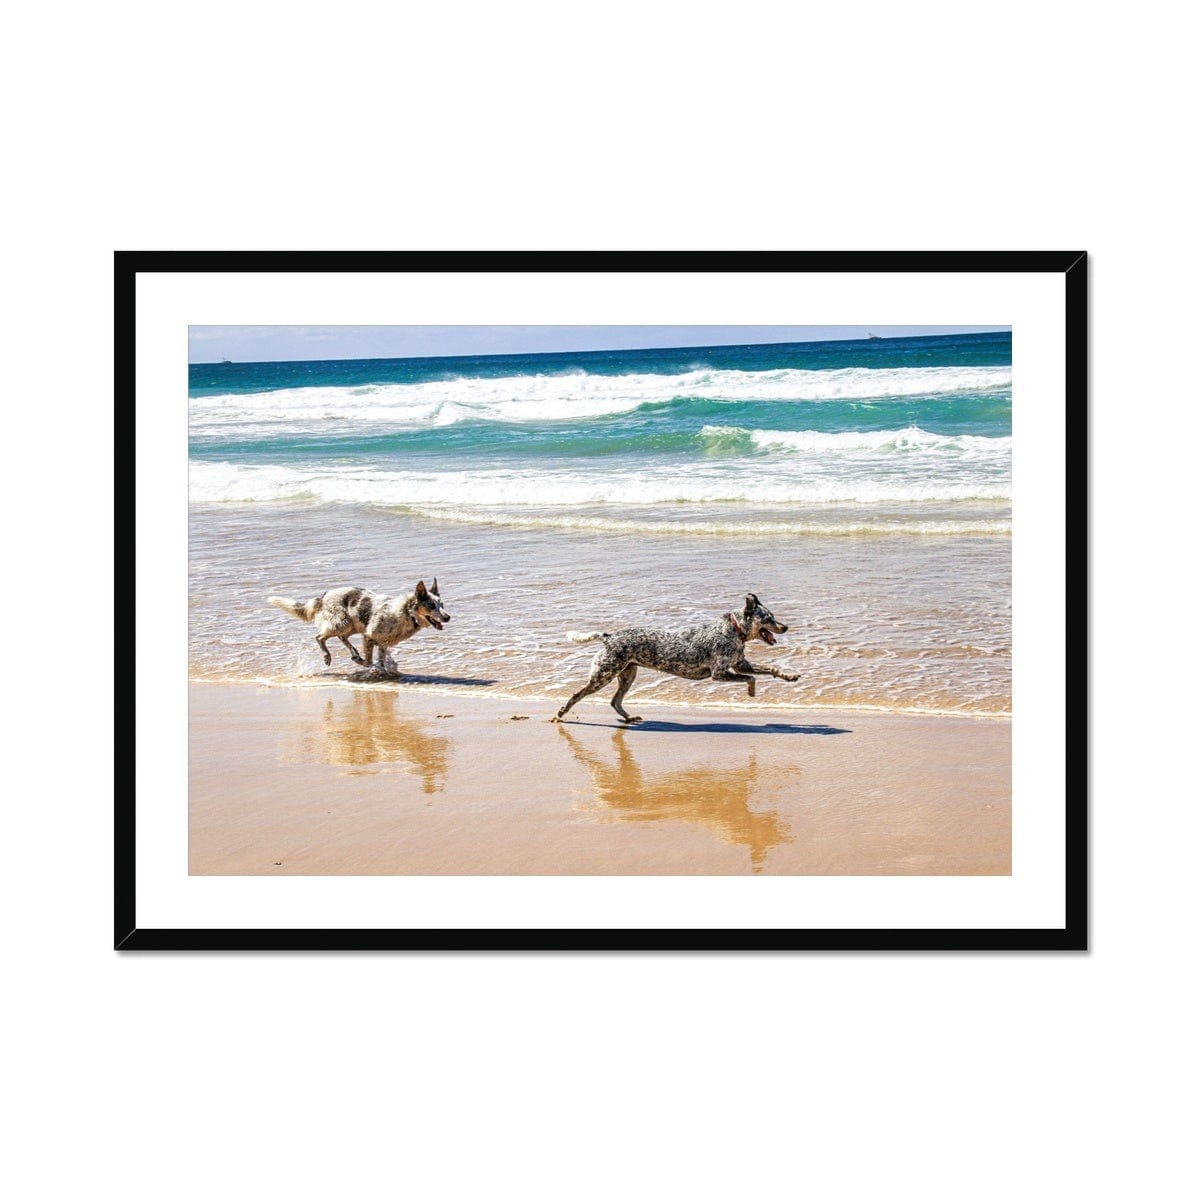 Adam Davies Framed 28"x20" (71.12x50.8cm) / Black Frame Byron Bay Dogs Framed & Mounted Print